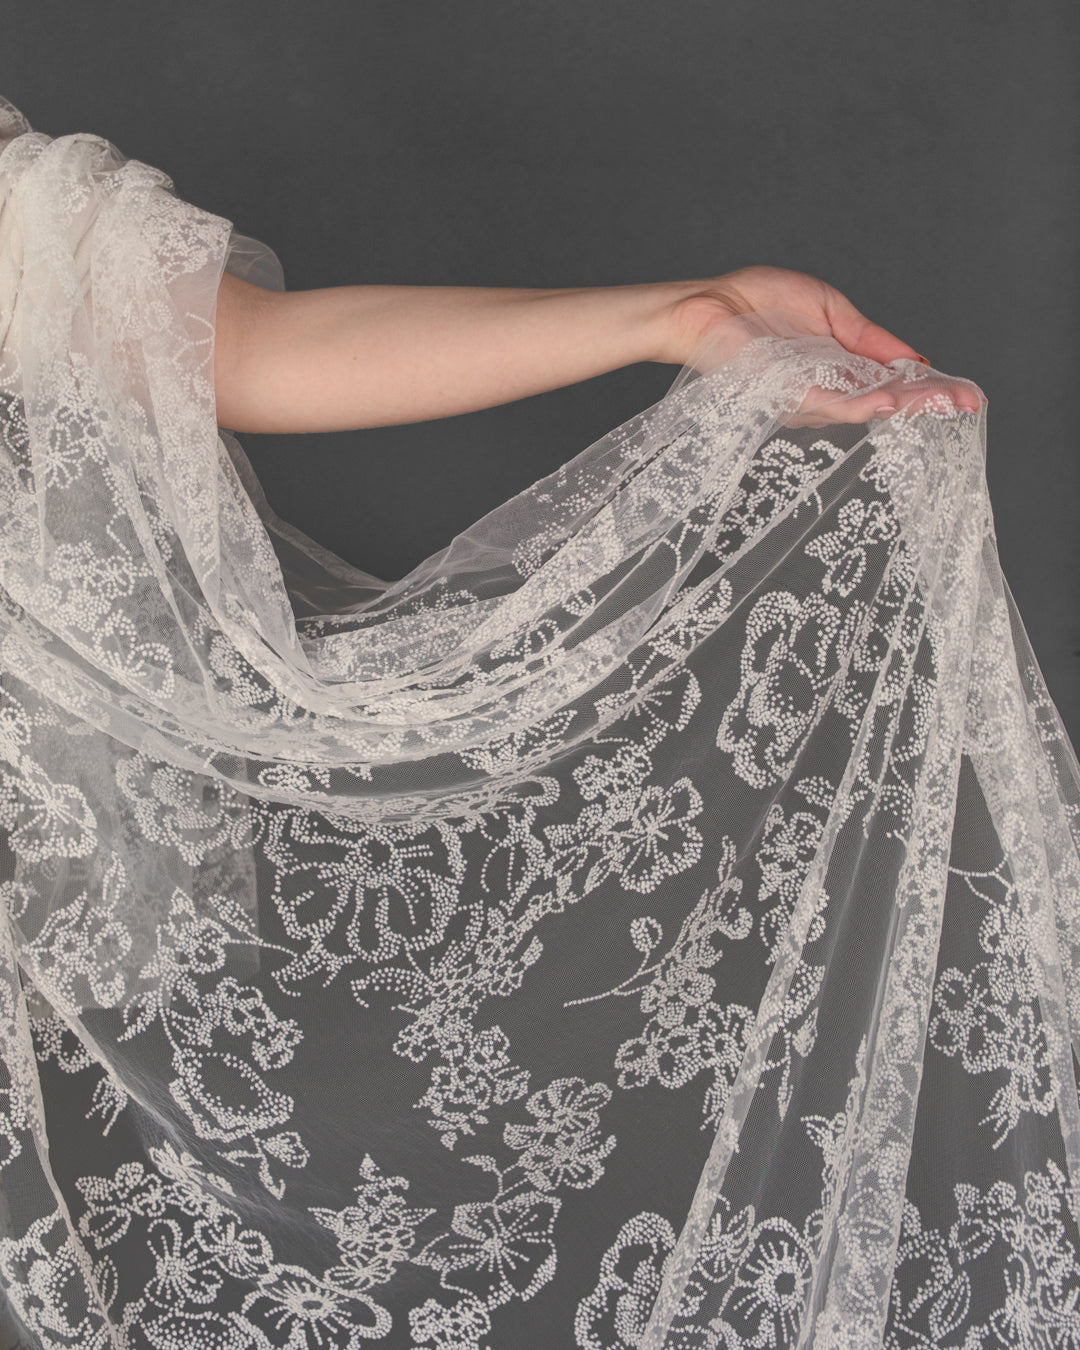 Darling Daydream Flocked Lightweight Netting - Ivory | Blackbird Fabrics